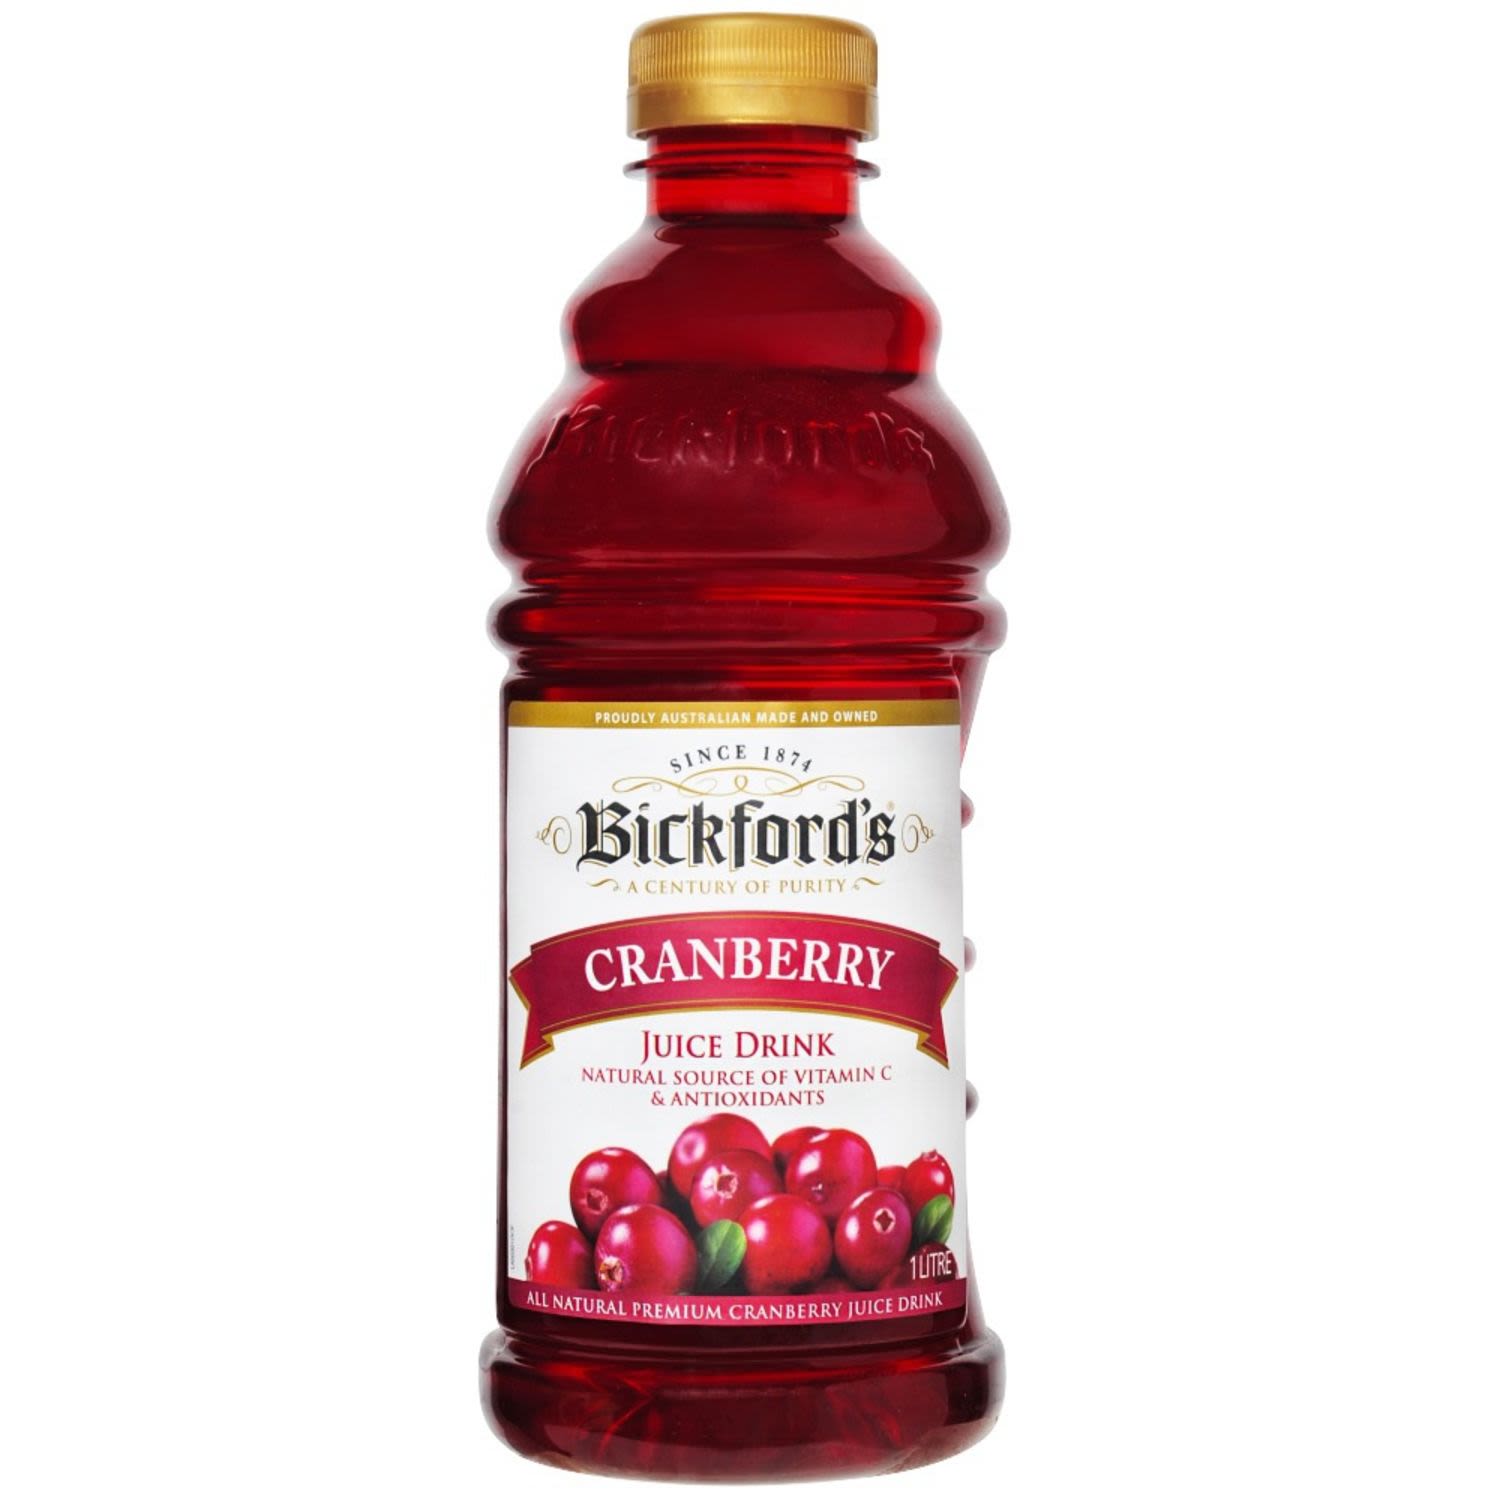 Bickford's Cranberry Juice Drink, 1 Litre